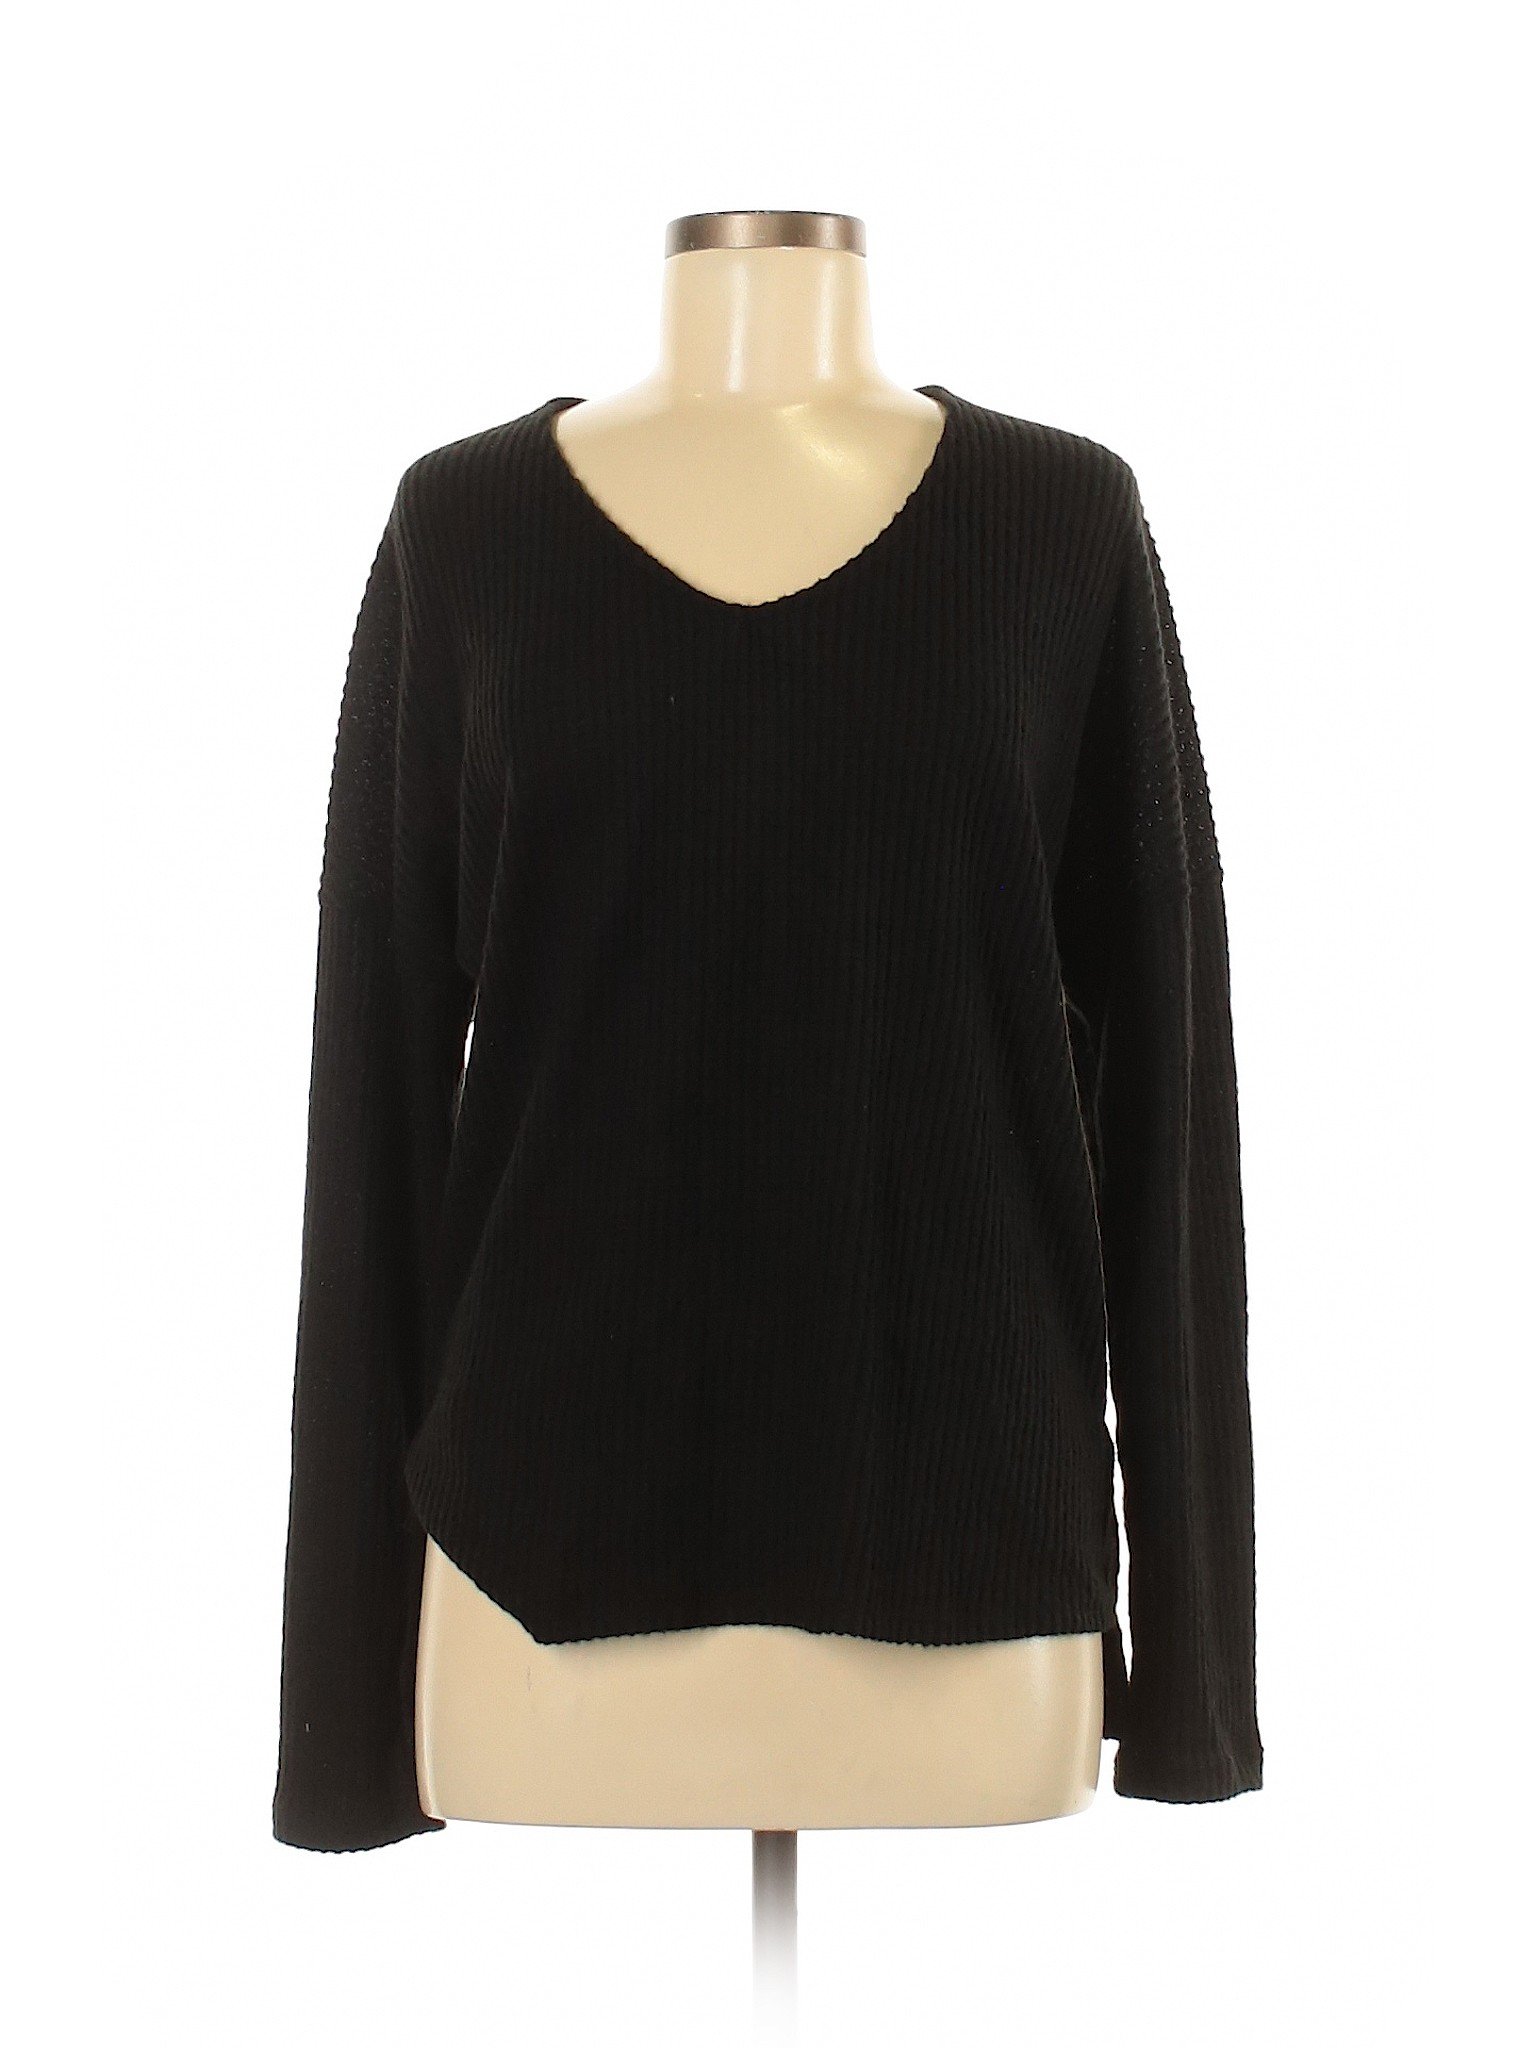 Active USA Women Black Pullover Sweater M | eBay